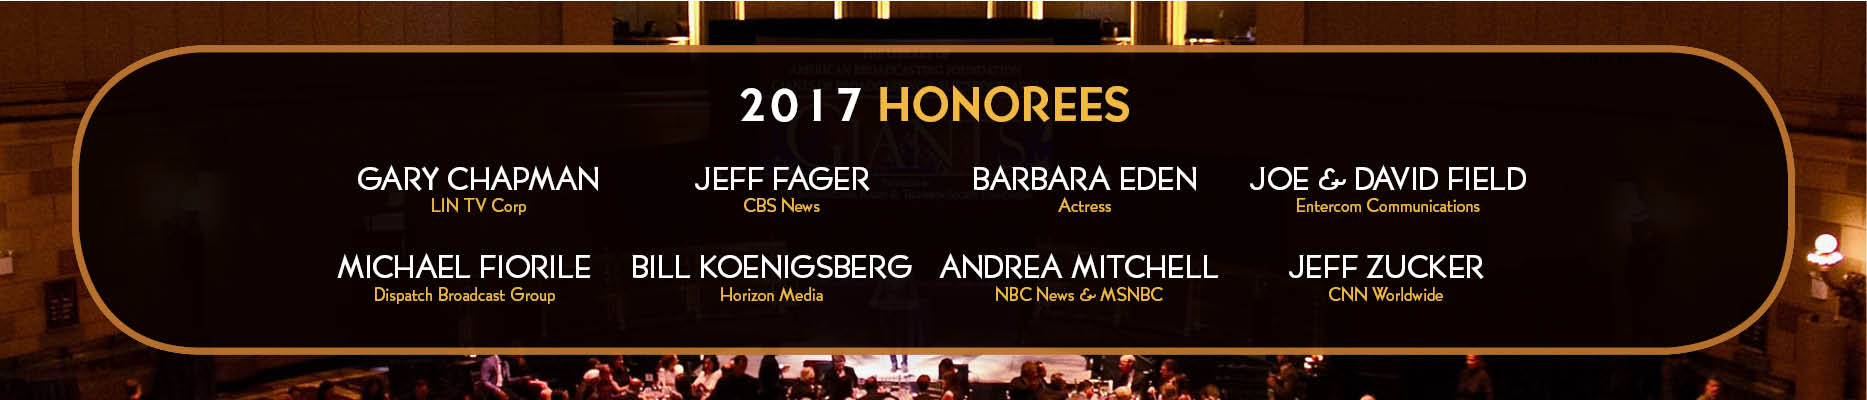 2017 Honorees